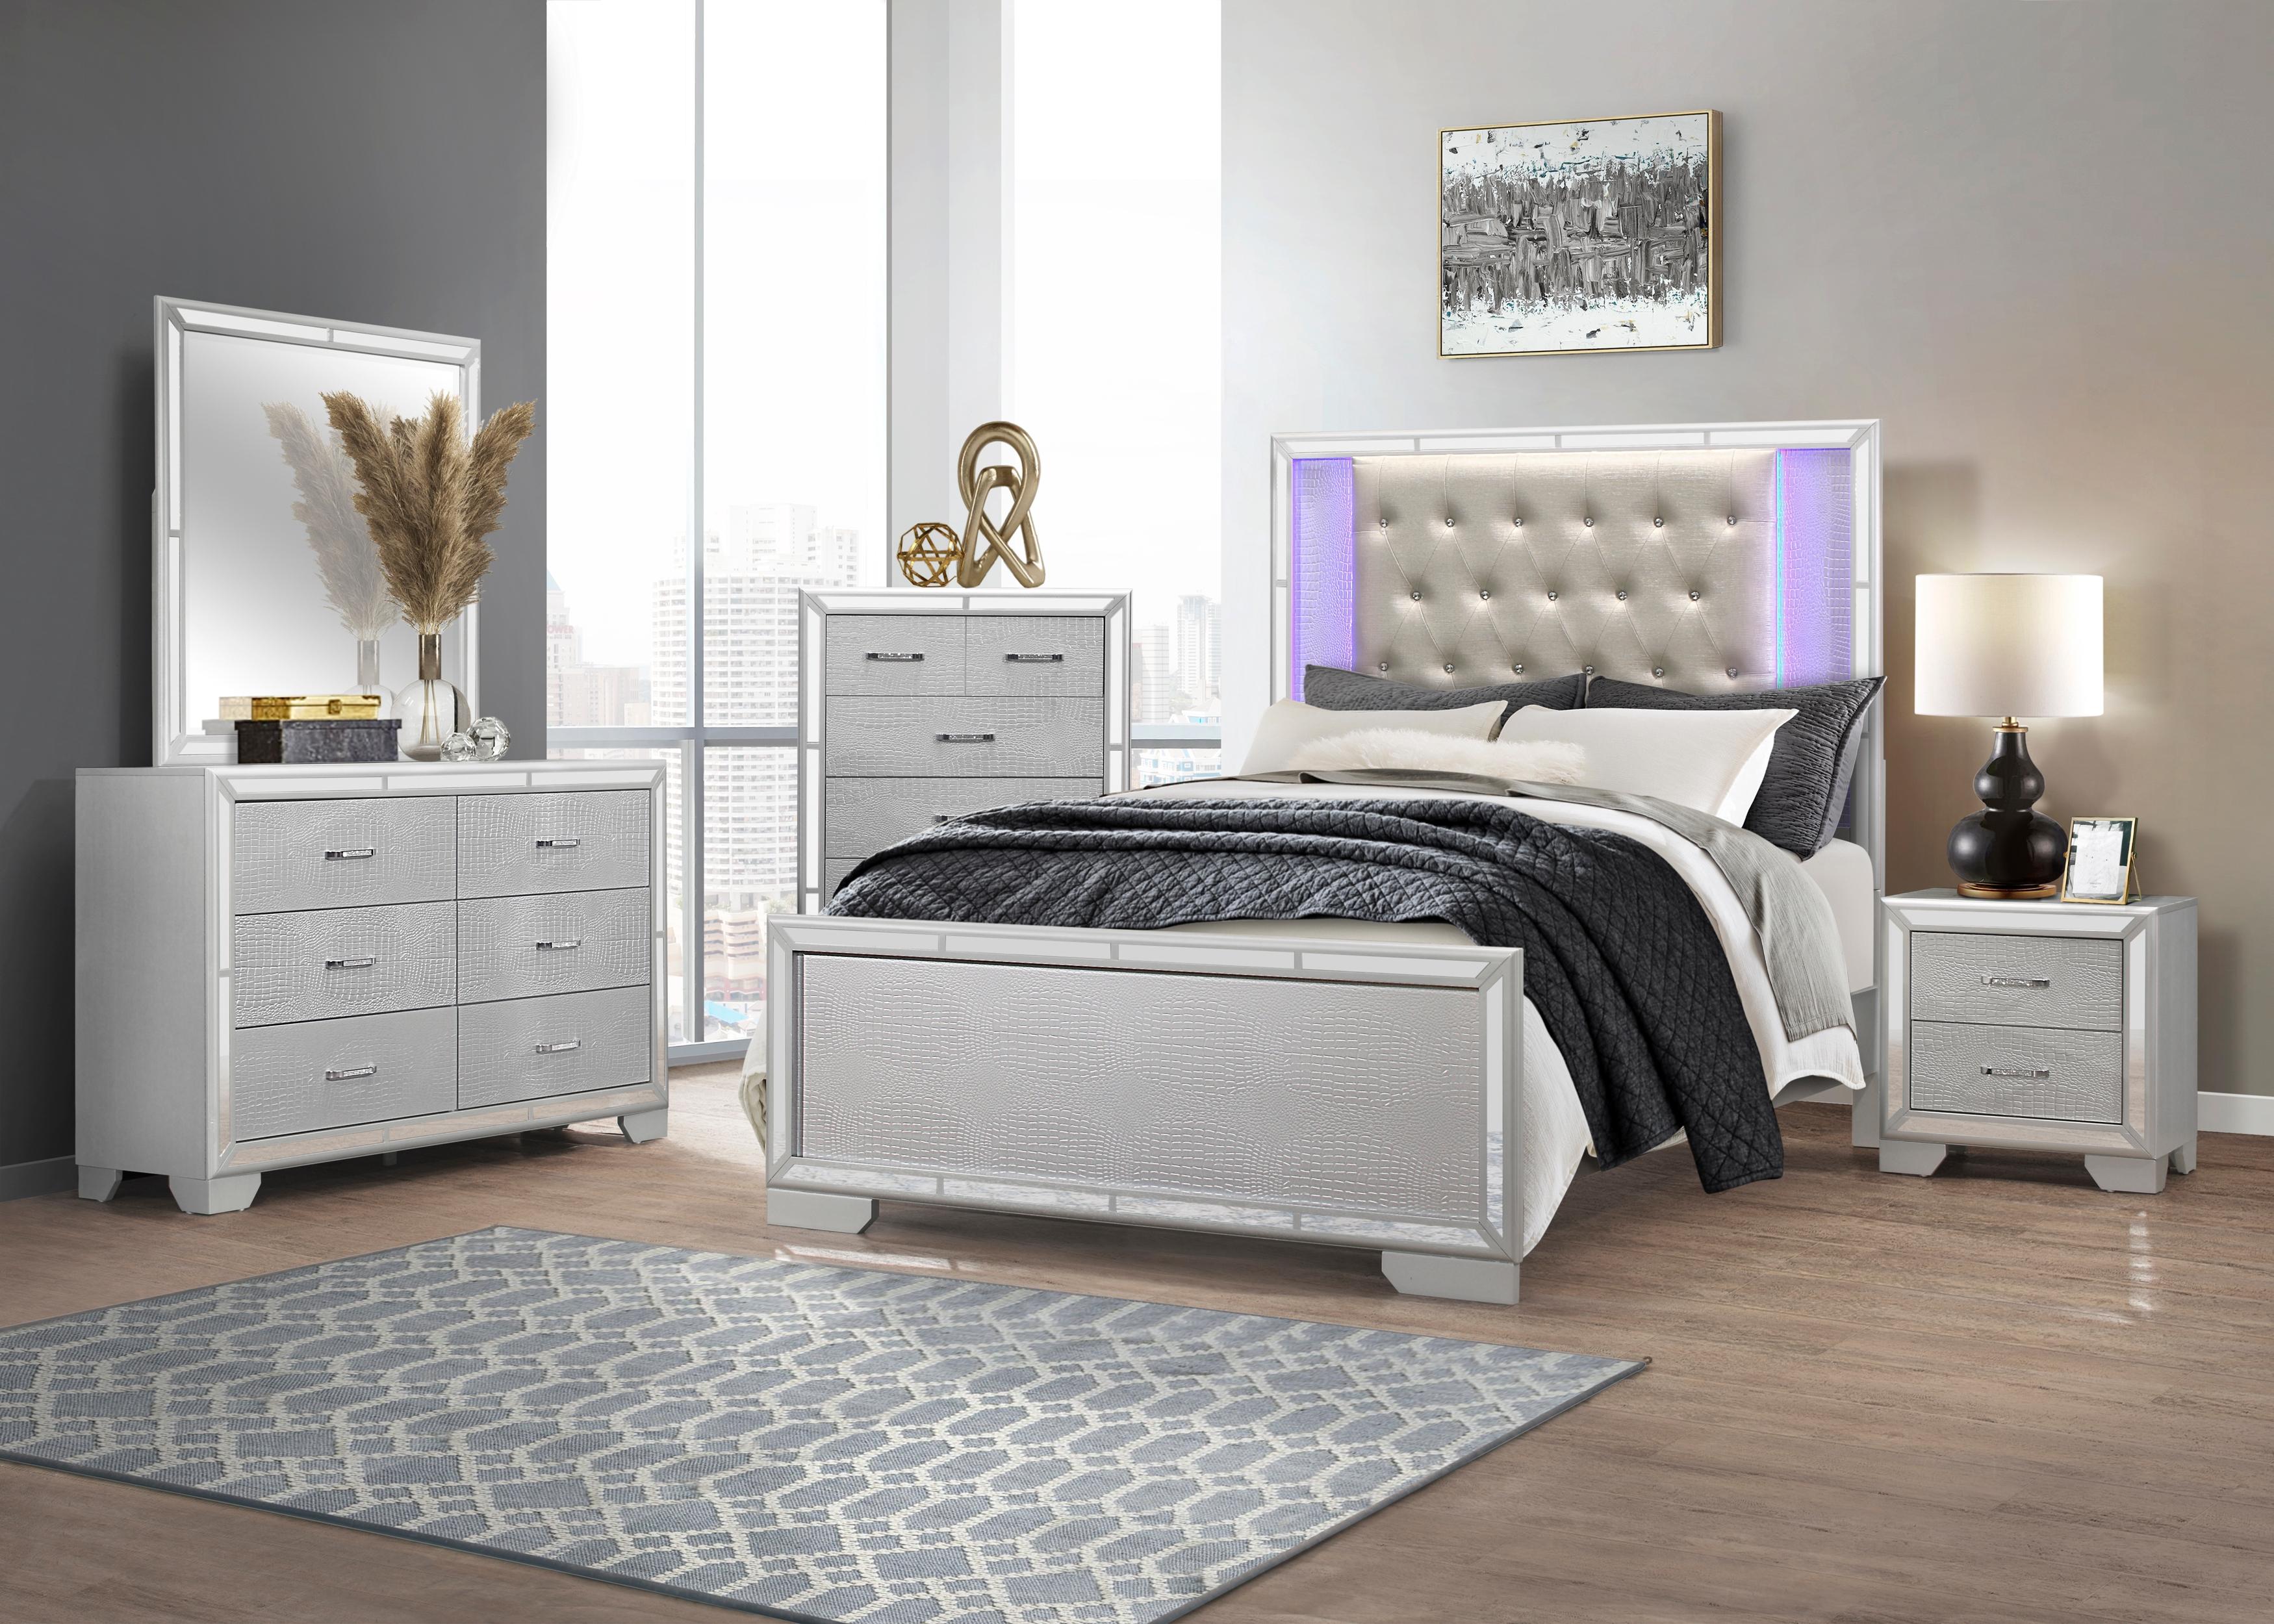 

    
Glam Silver Wood Queen Bedroom Set 3pcs Homelegance 1428SV-1* Aveline
